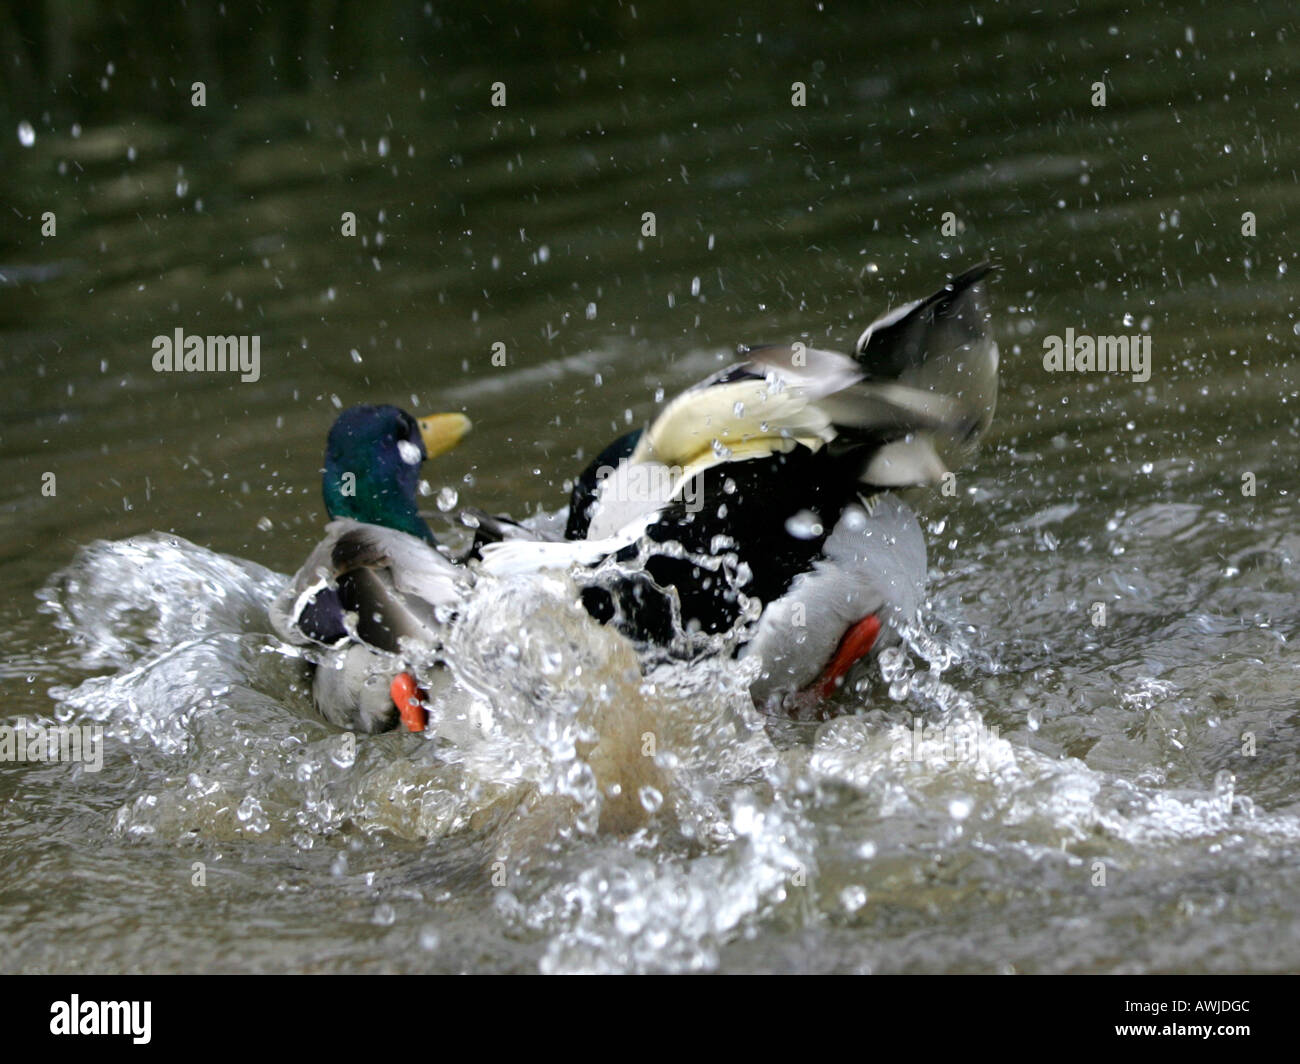 Two mallard fighting in the water. Stock Photo